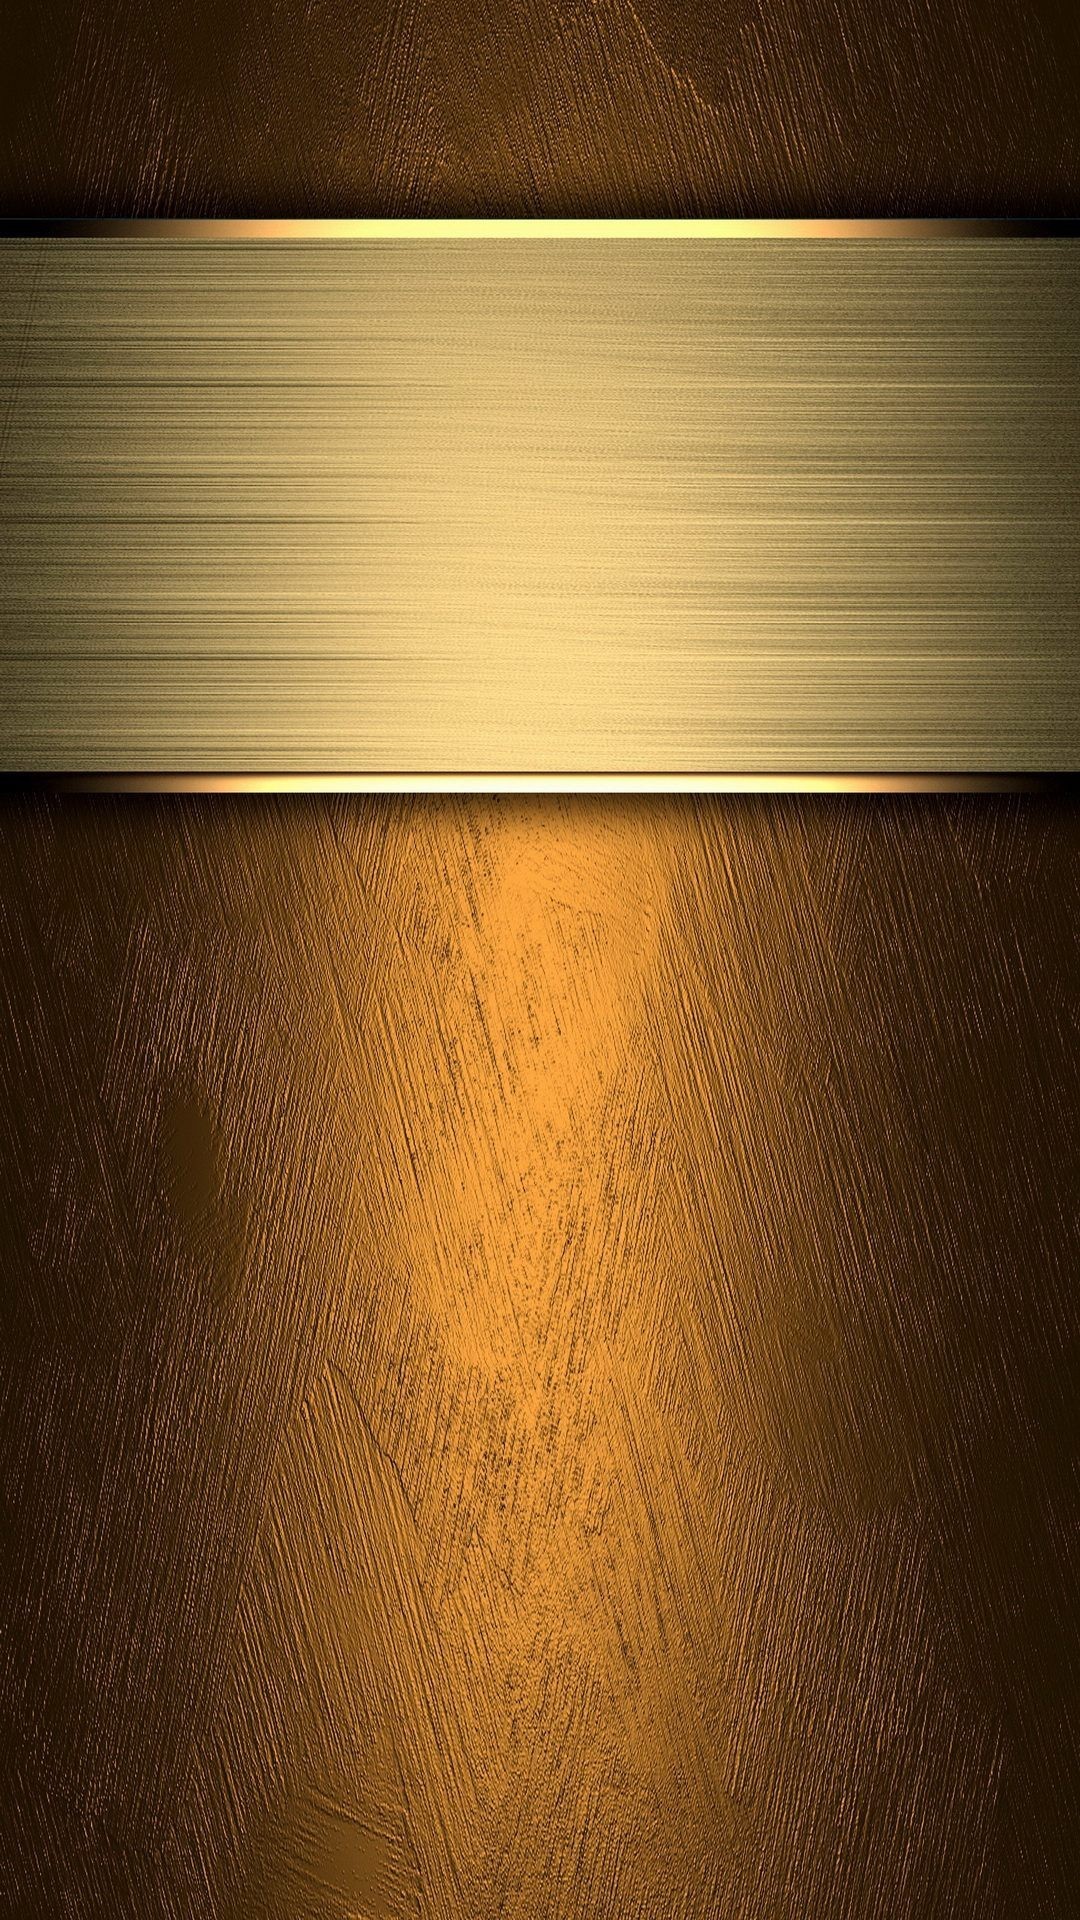 Elegant Gold iPhone 6 Plus Wallpaper Wallpaper For iPhone 6